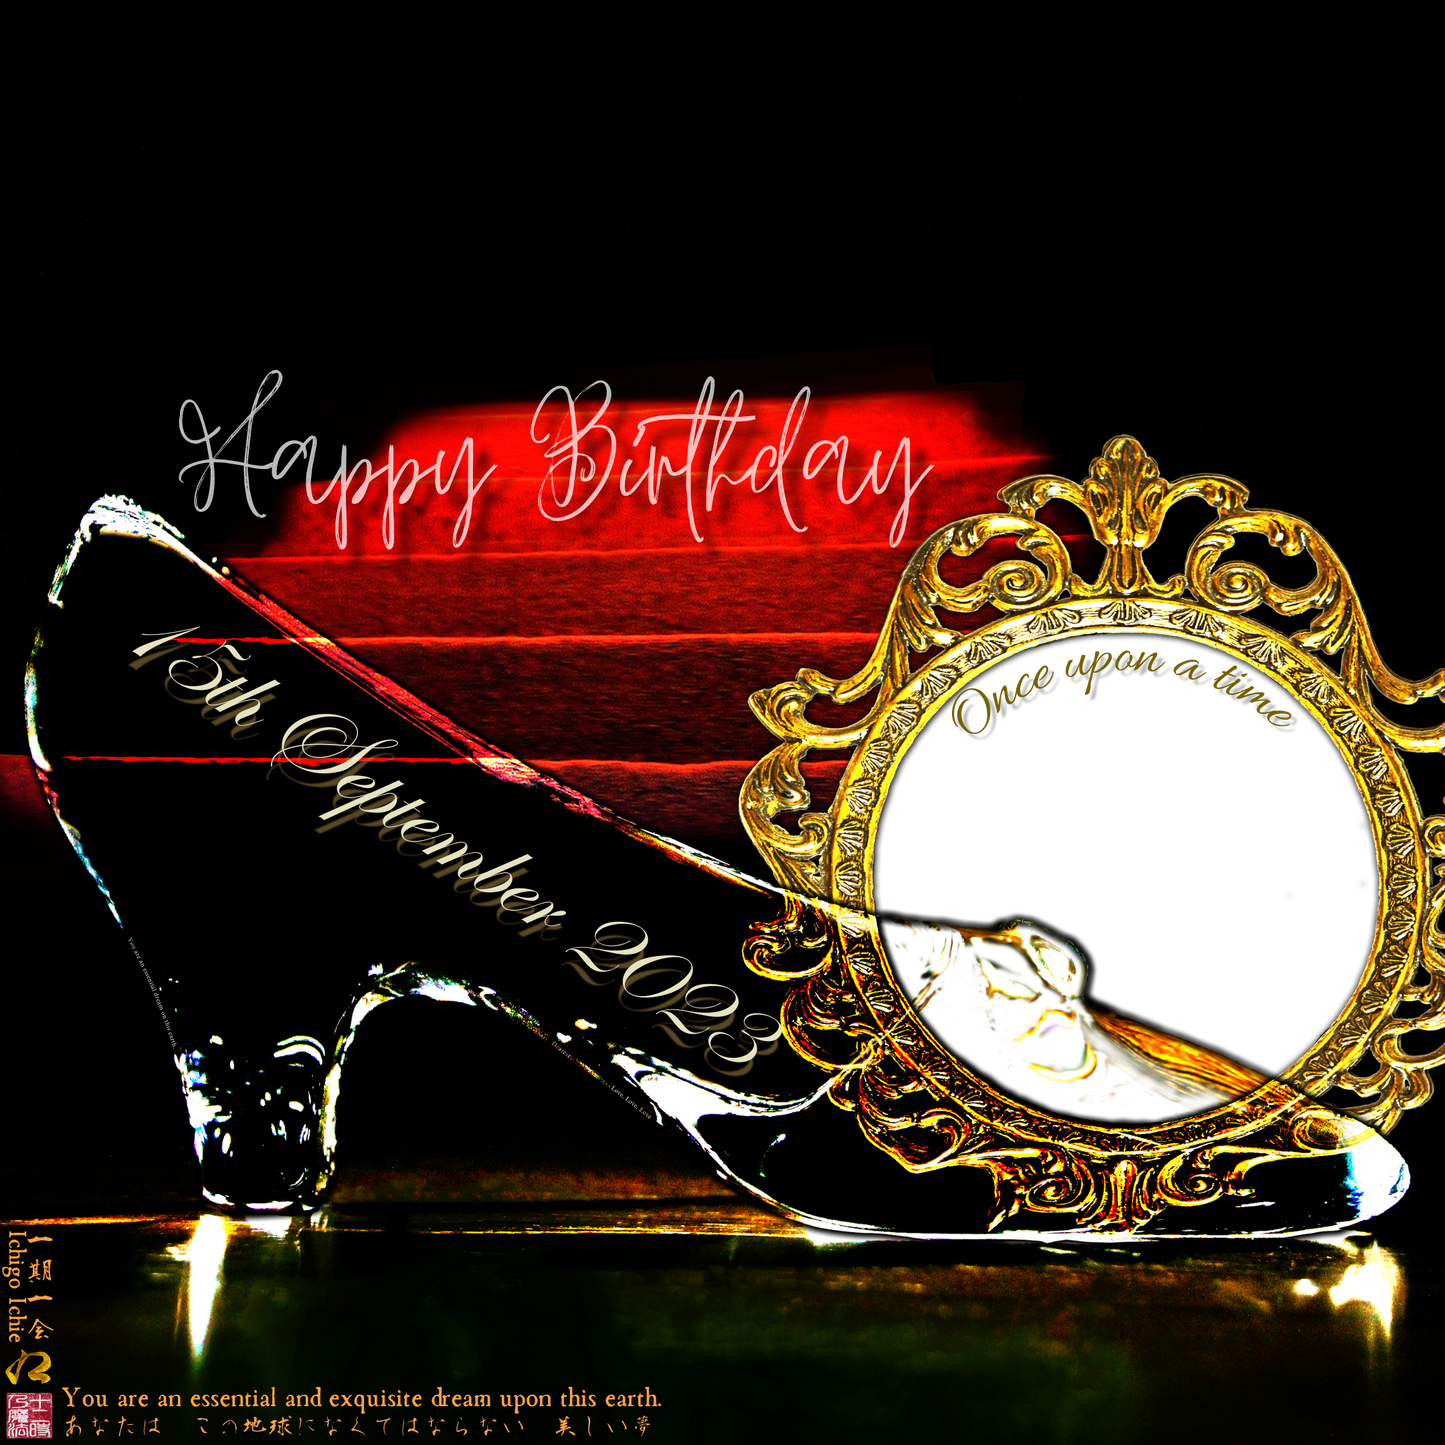 Happy Birthday Glass Slipper "Ichigo Ichie" 15th September 2023 the Right (1-of-1) NFT Art